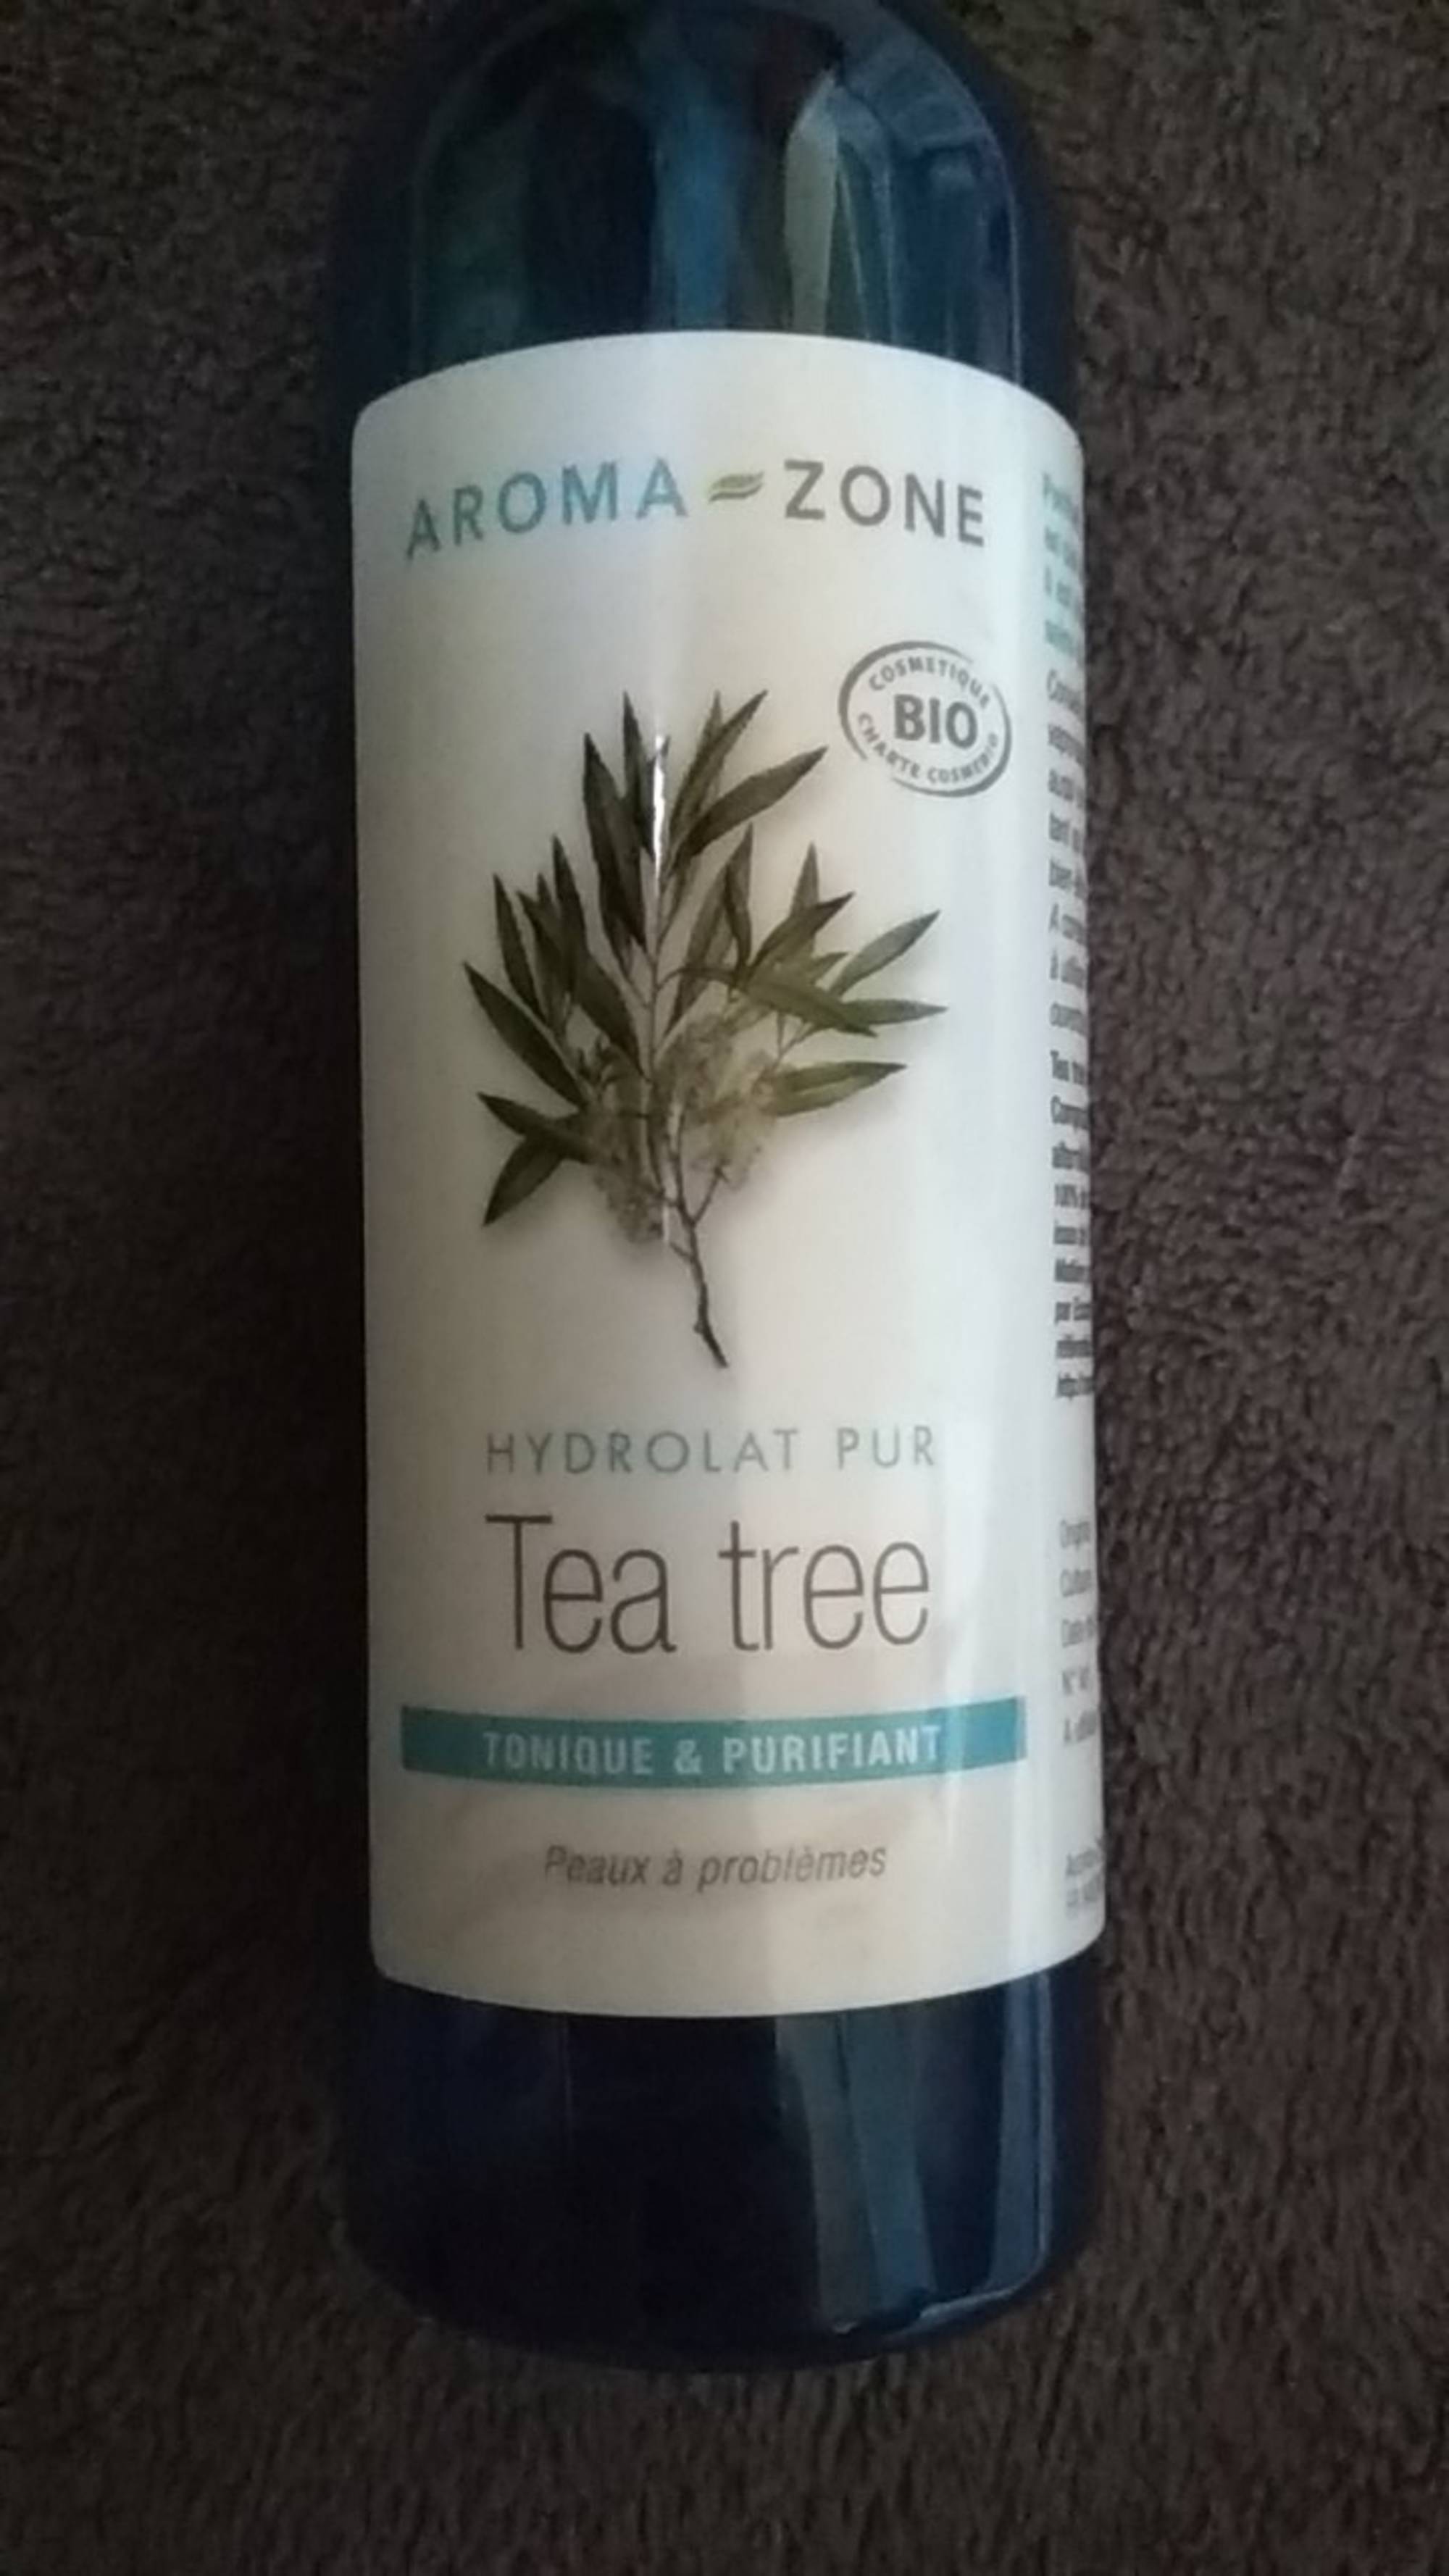 AROMA-ZONE - Hydrolat pur tea tree tonique et purifiant